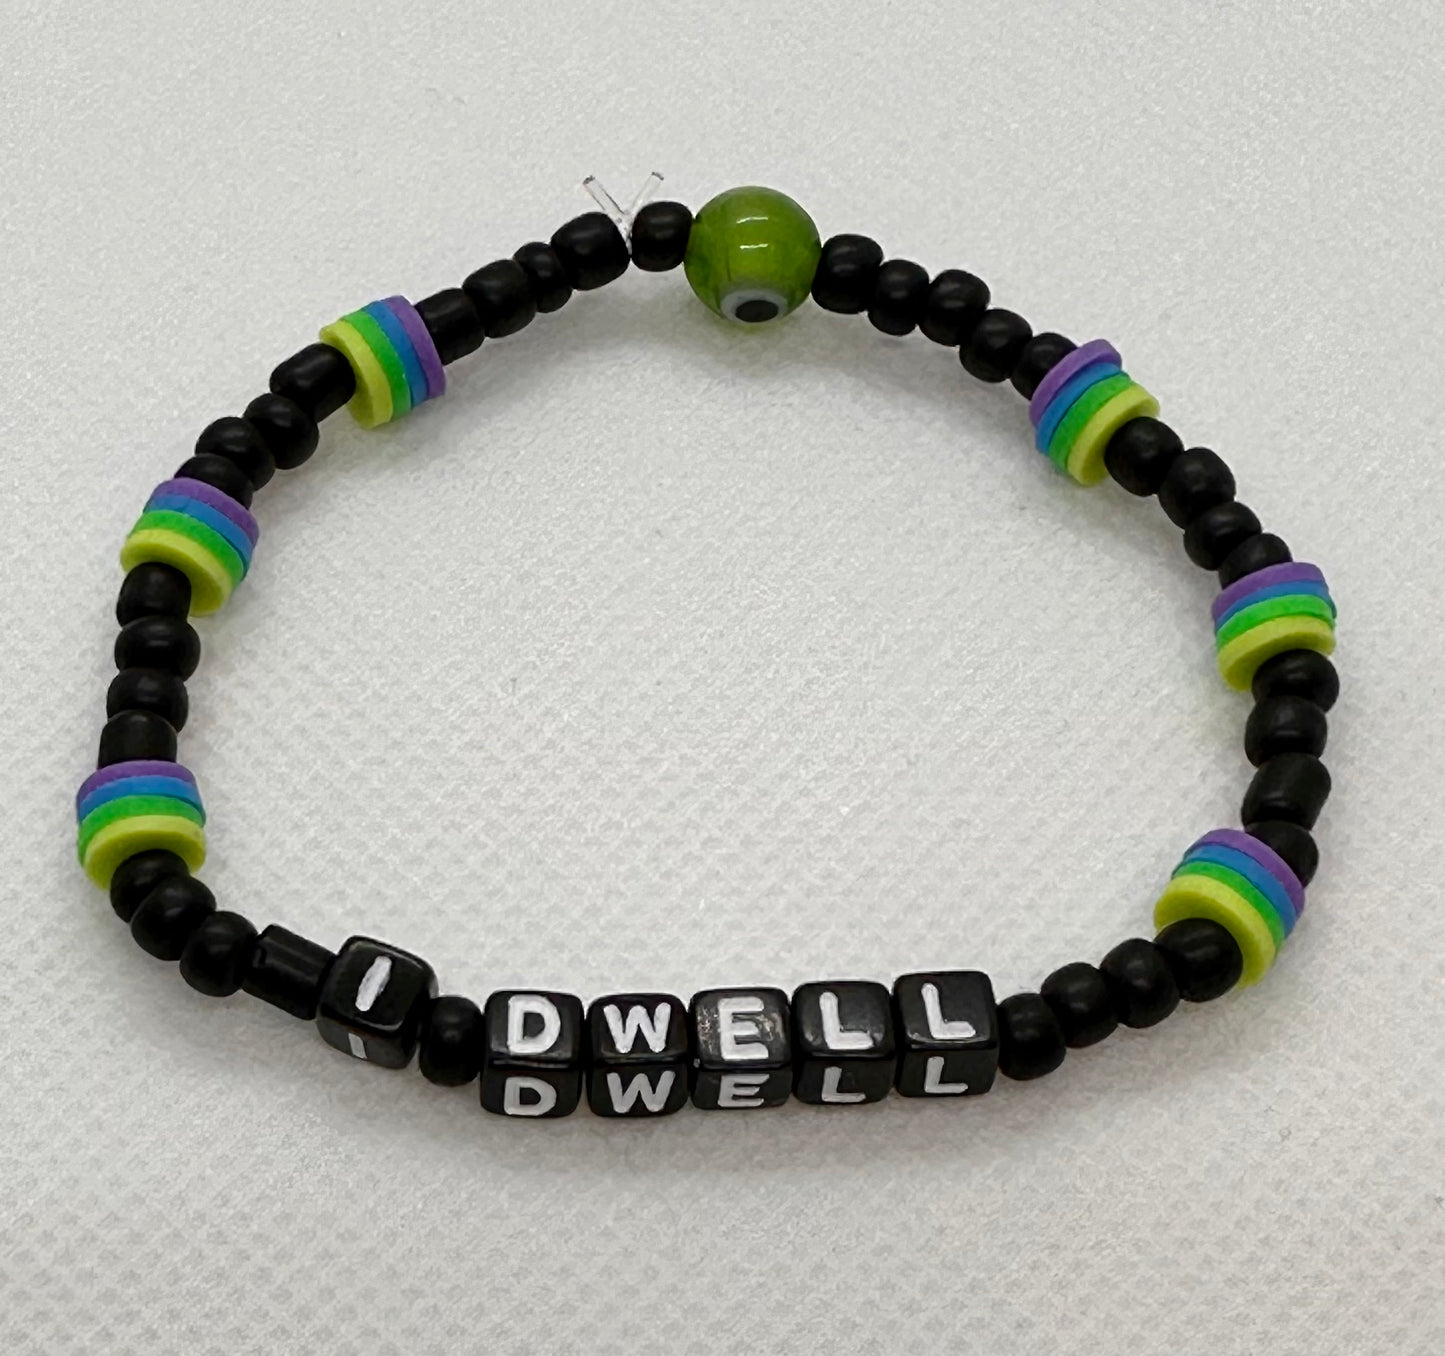 I dwell